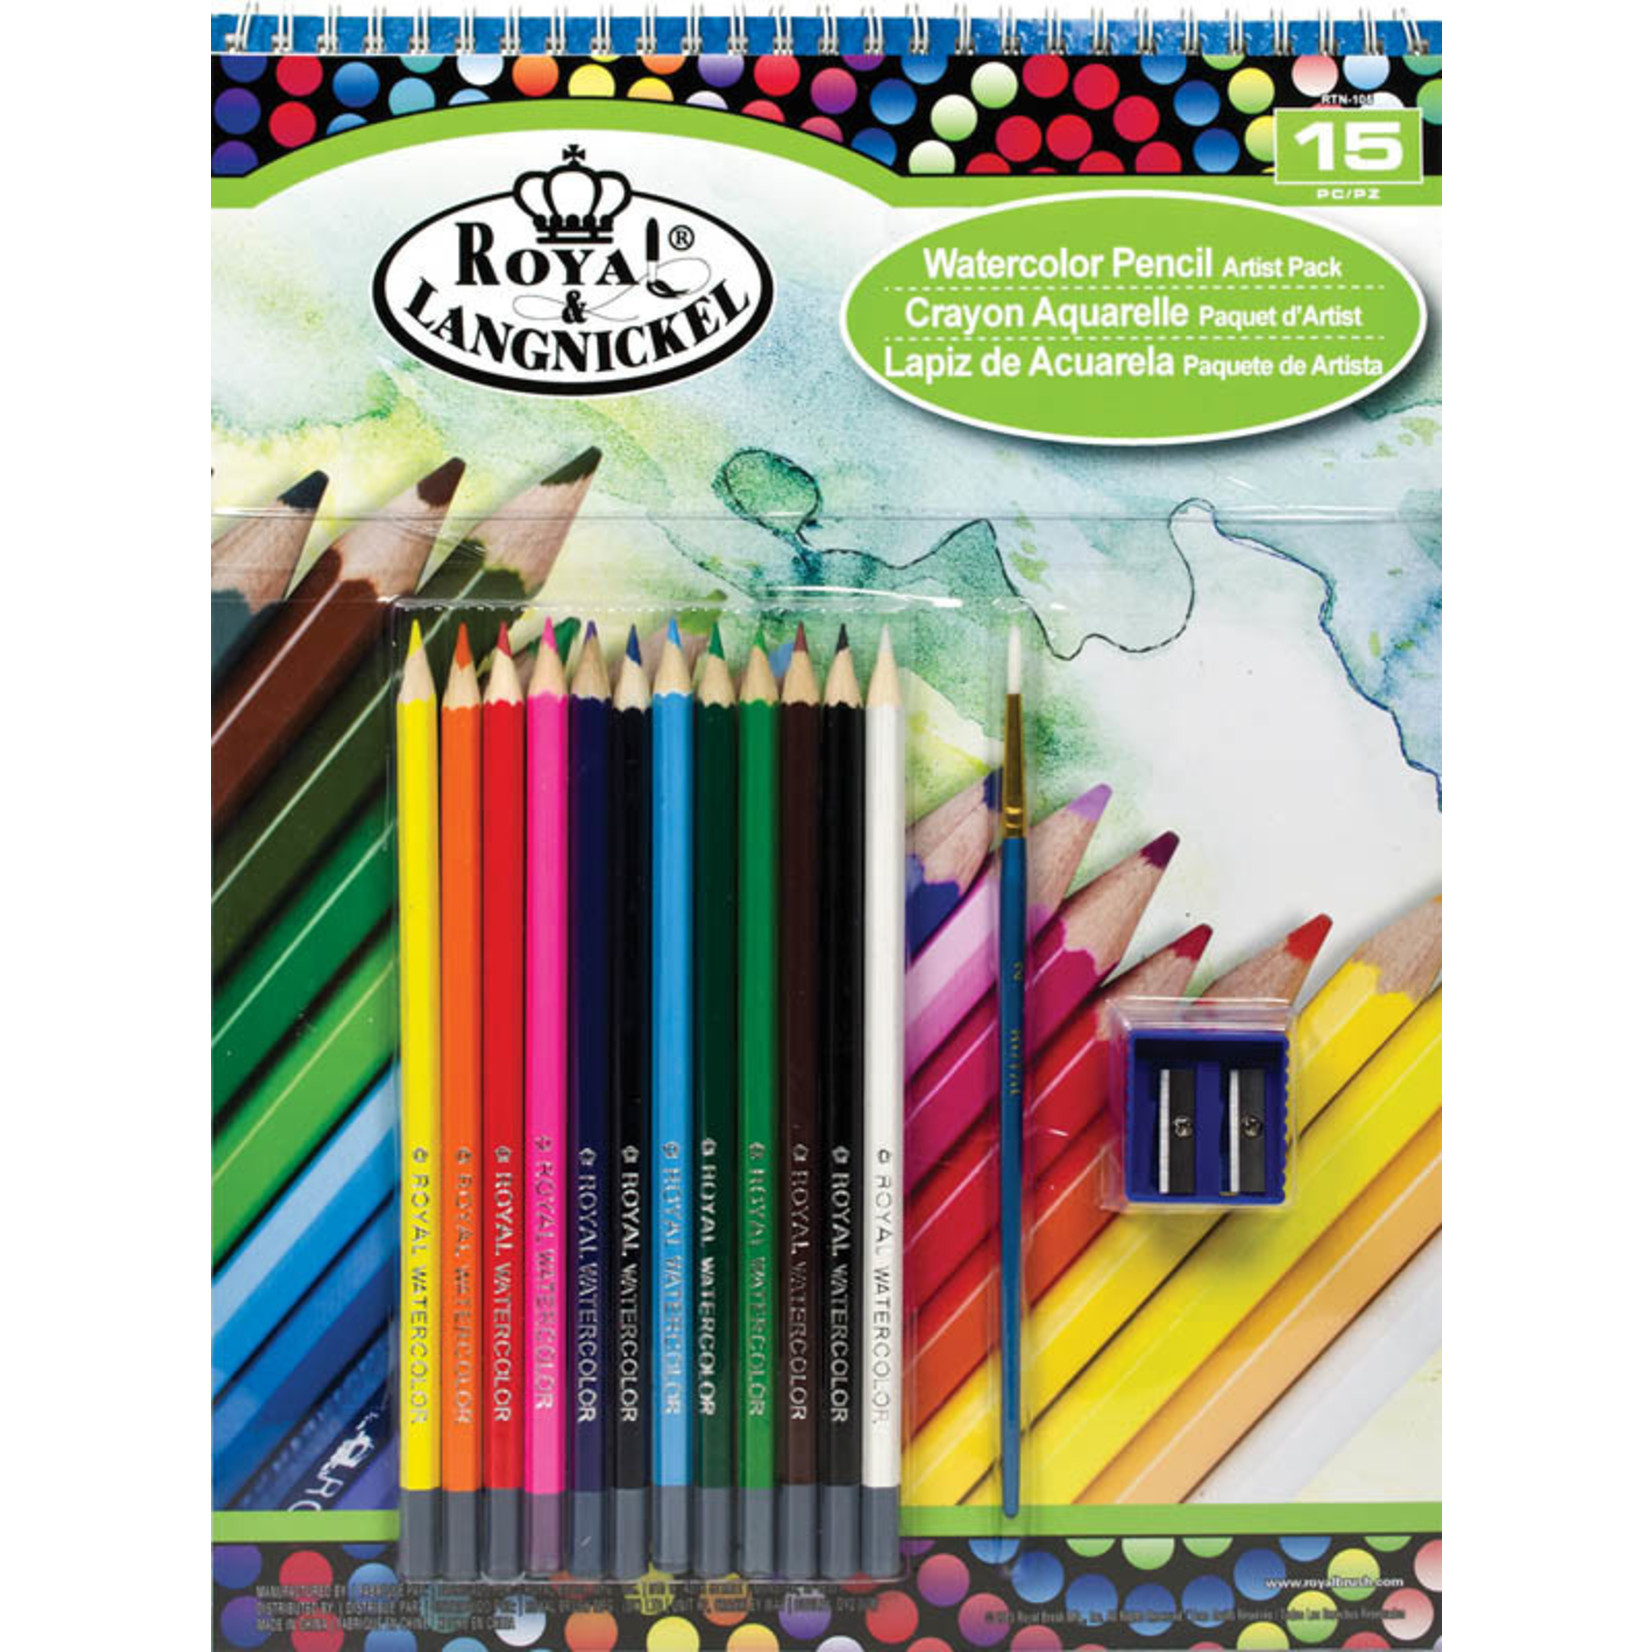 Royal & Langnickel Watercolor Pencil Artist Pack